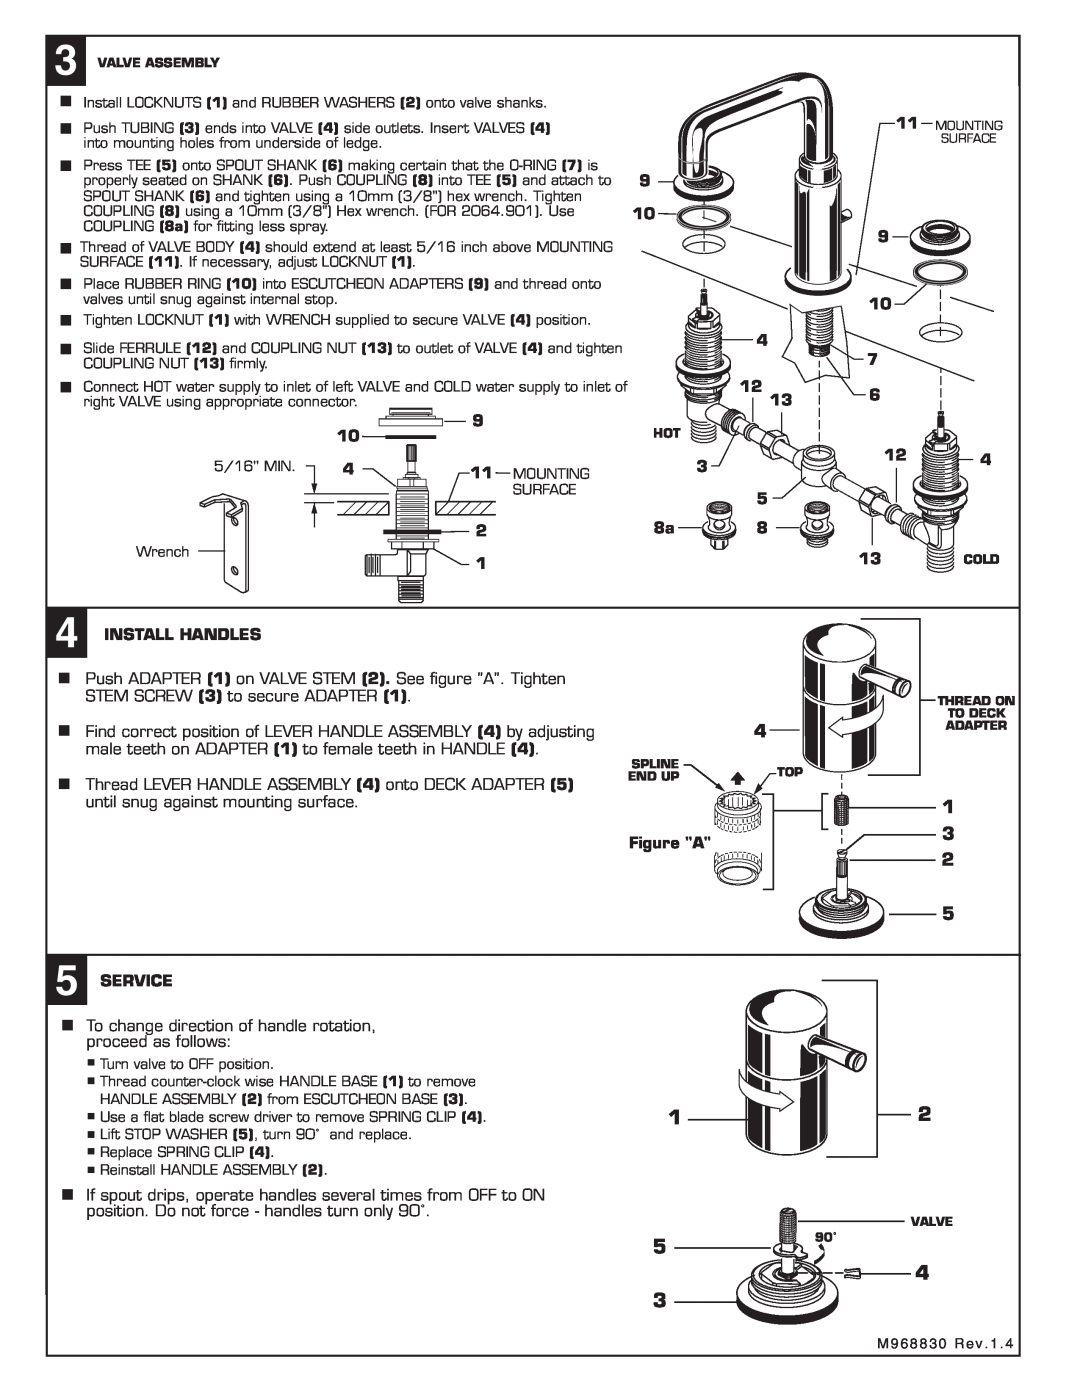 American Standard 2064.90X installation instructions Install Handles, Figure A, Service 